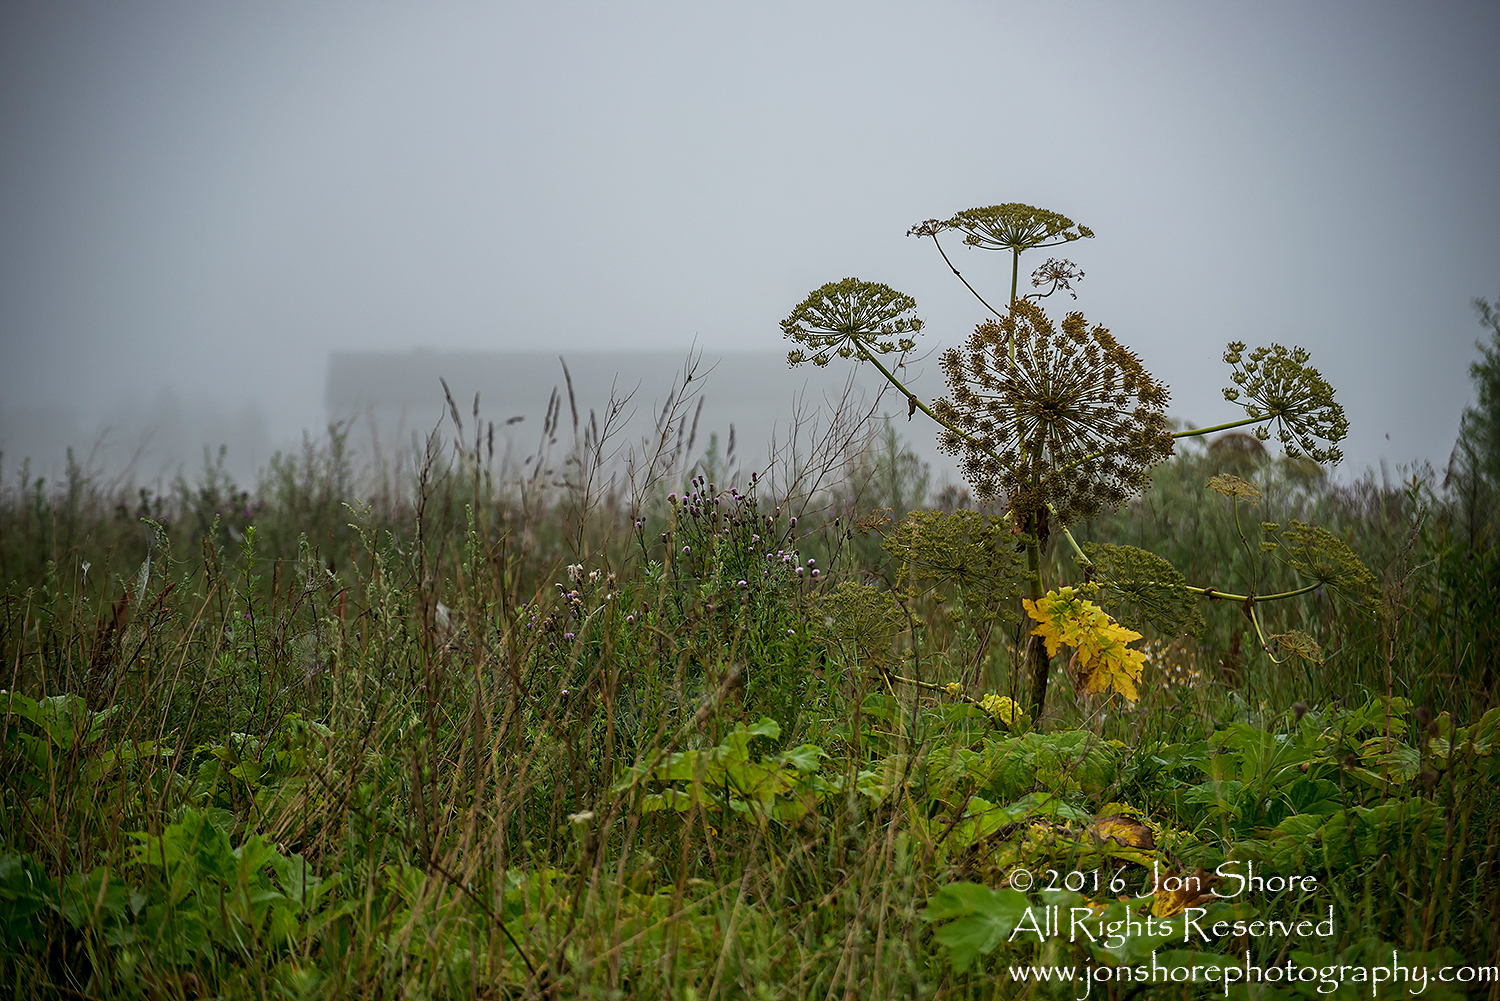 Foggy morning in Rural Latvia